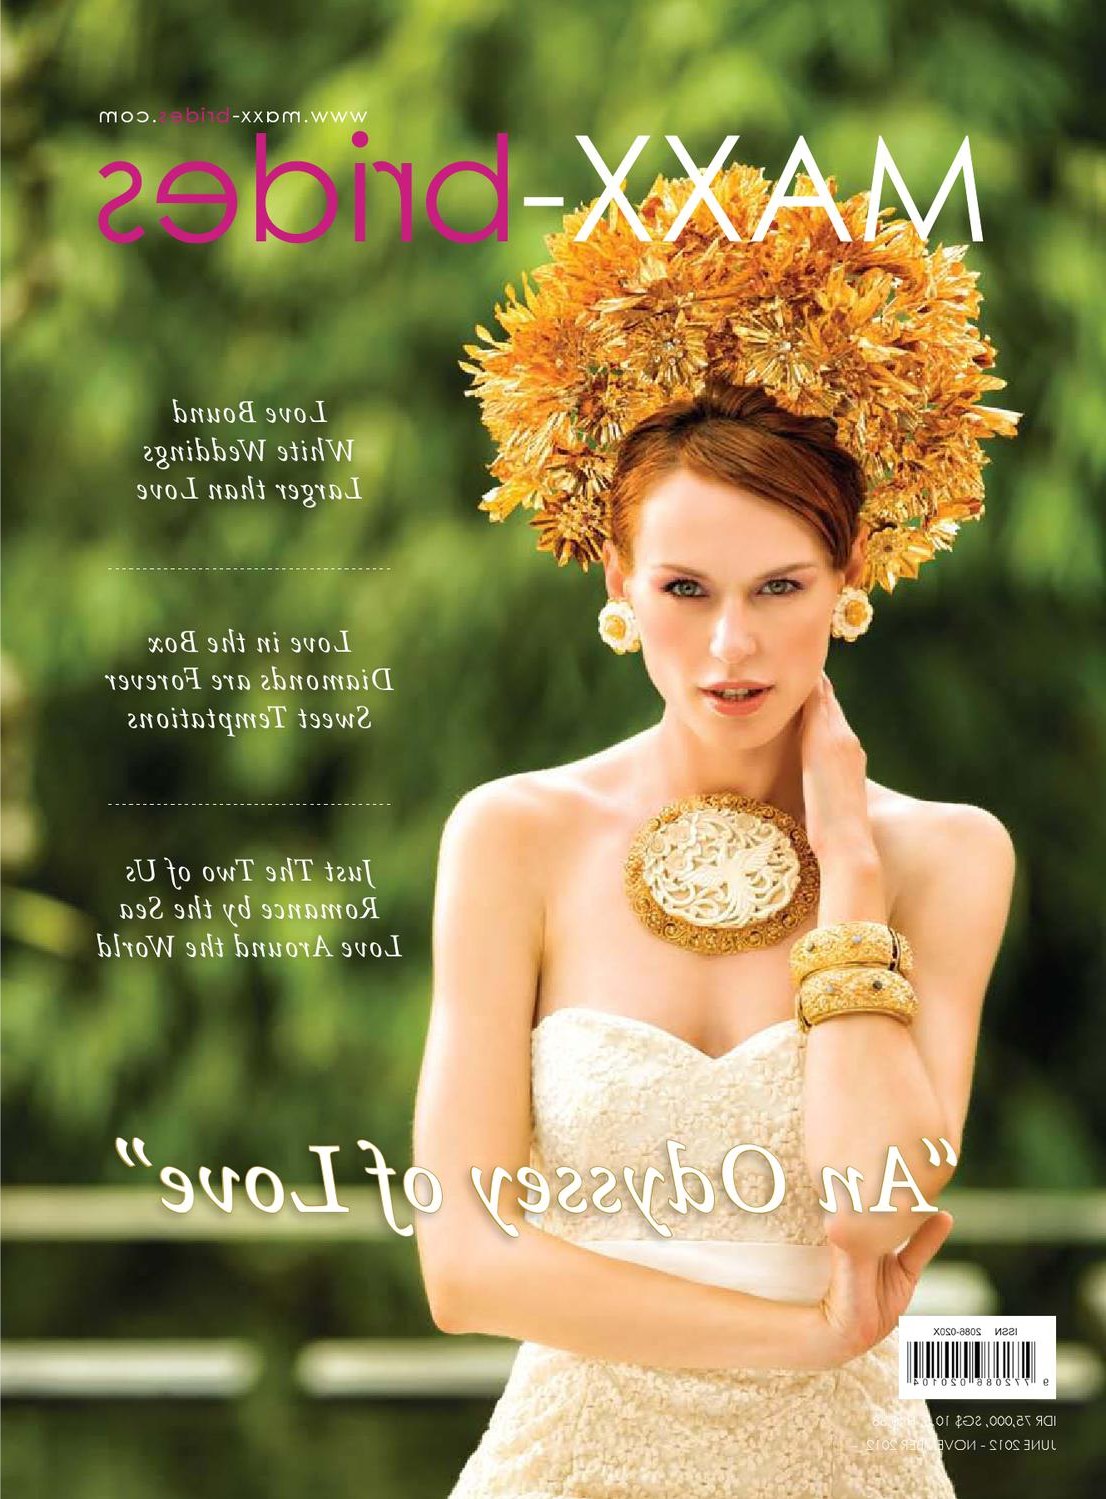 Bentuk Kebaya Bridesmaid Hijab Wddj Maxx Brides Juni November Wedding Magazine by Dika Rachman